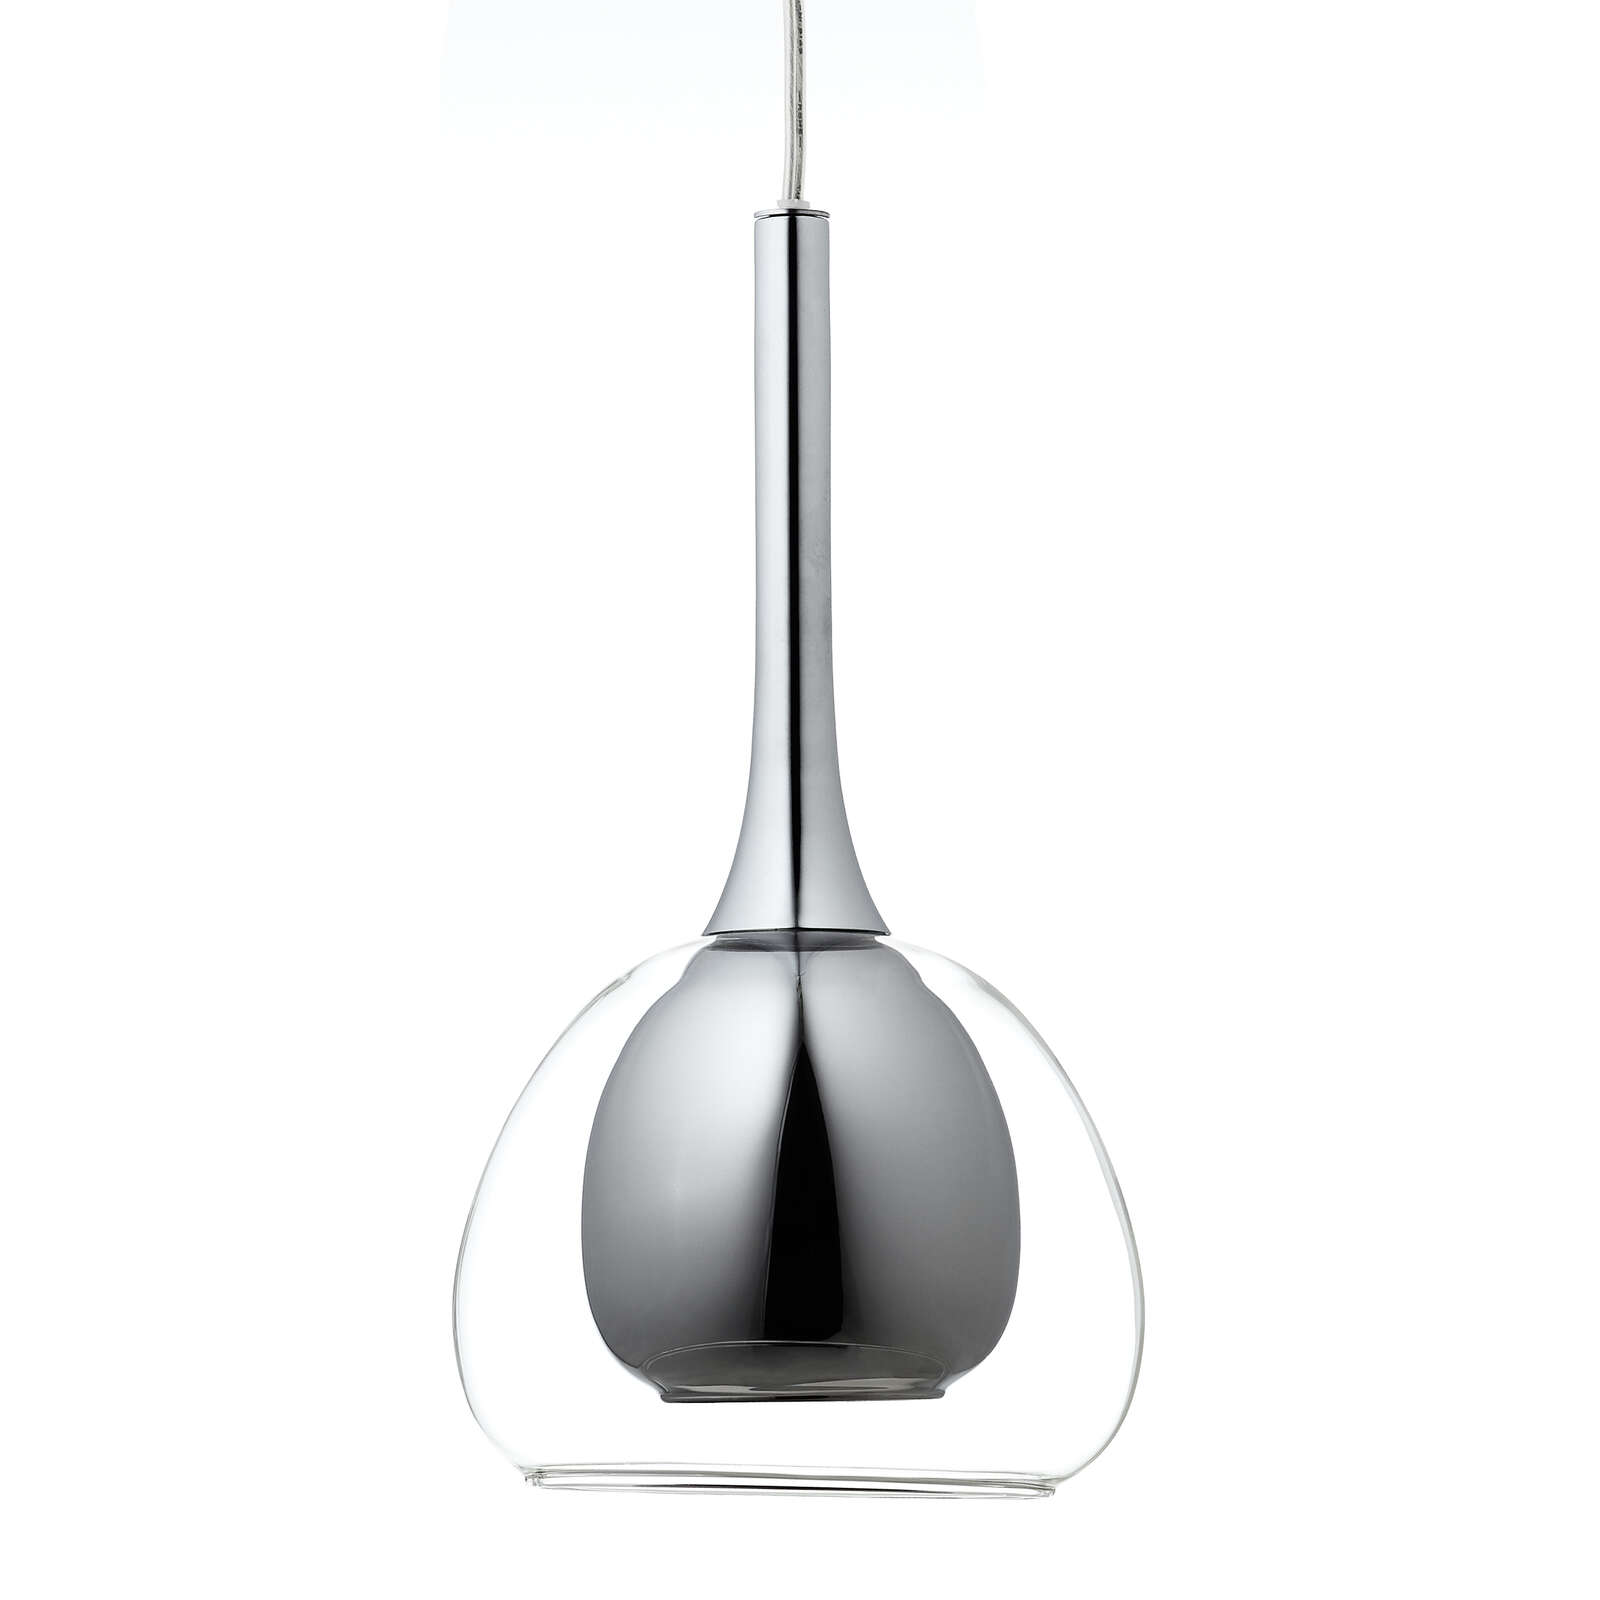             Glass pendant light - Iris 3 - Metallic
        